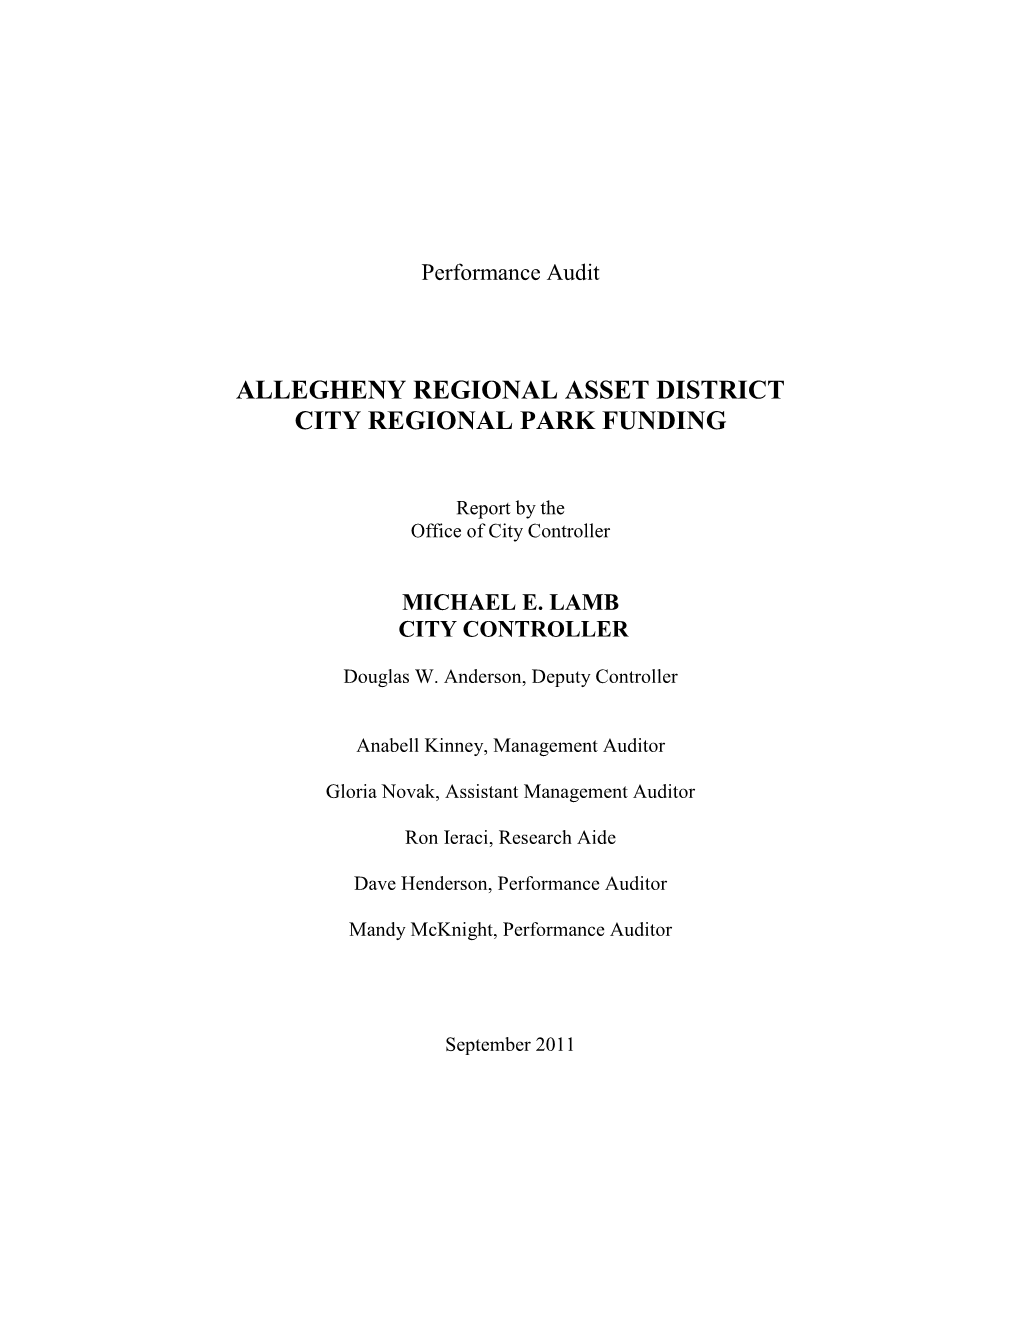 Allegheny Regional Asset District: City Regional Park